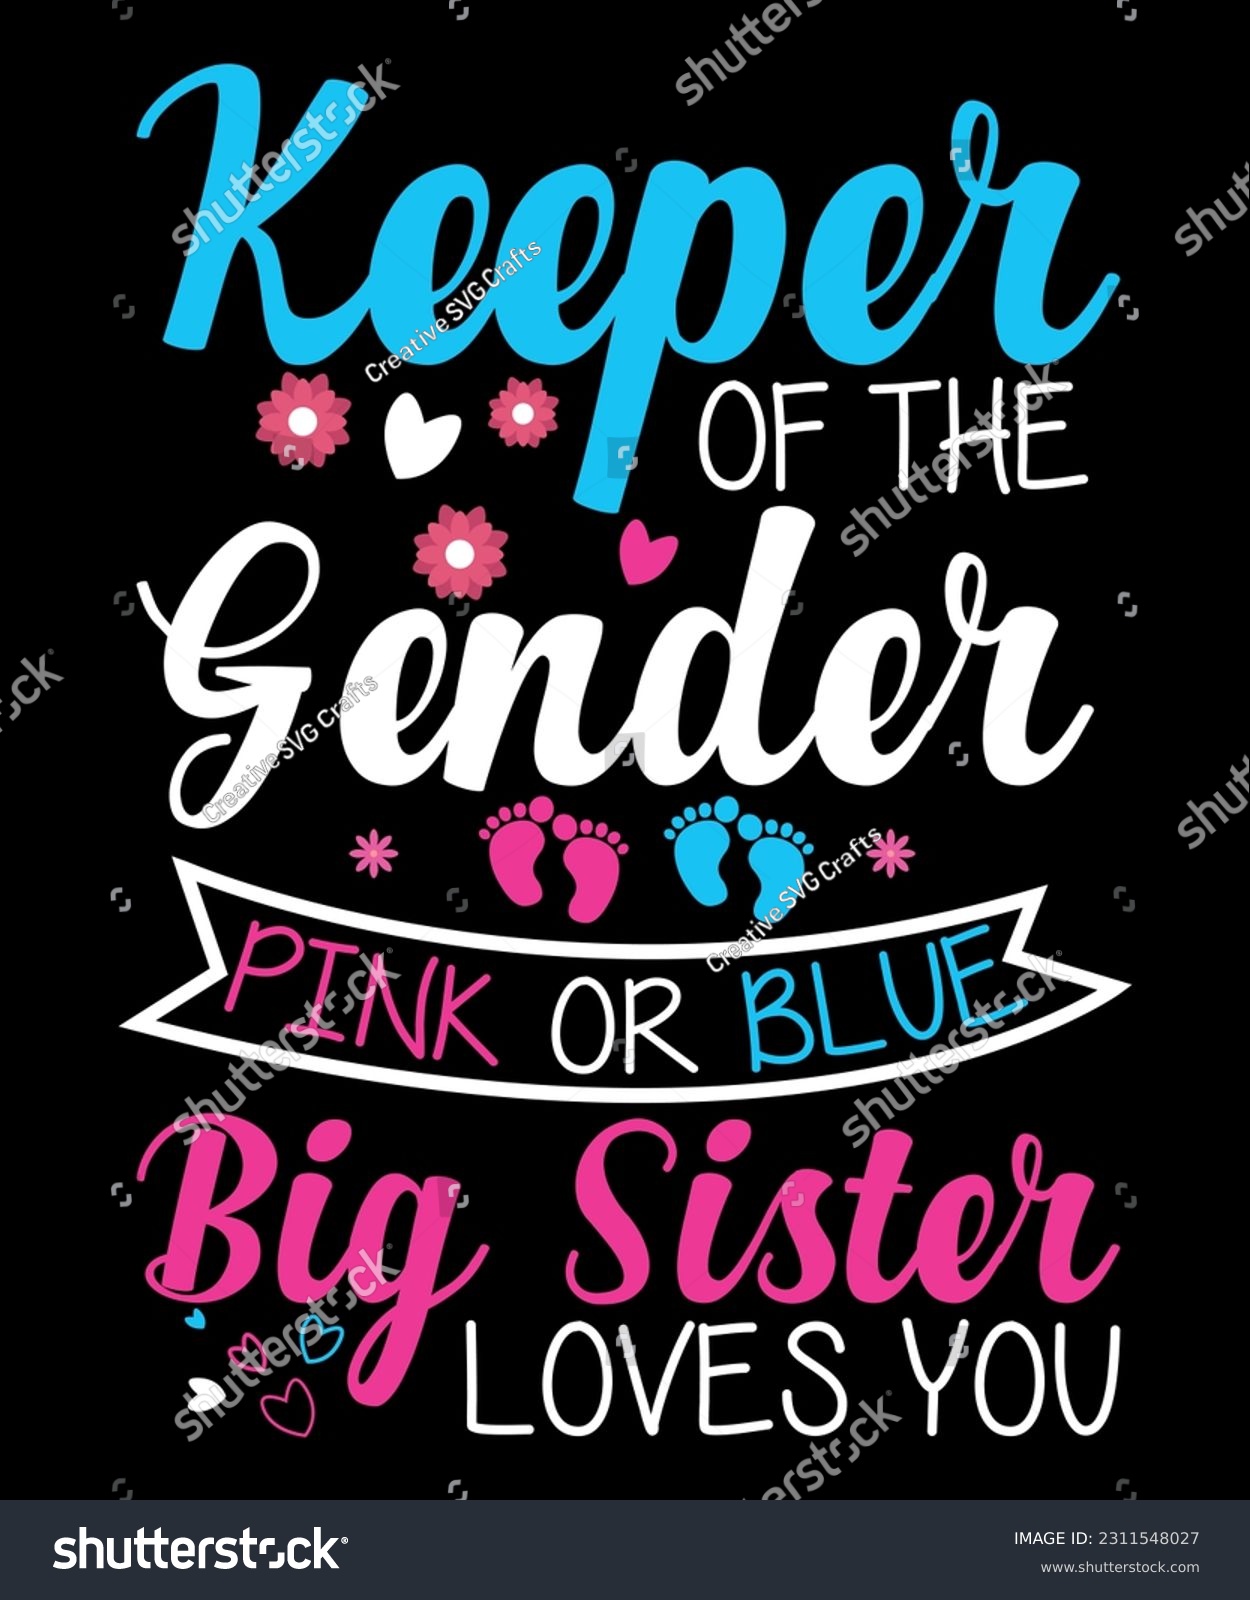 SVG of Keeper Of The Gender Pink Or Blue Big Sister Loves You, Baby, Shirt Print Template, gender reveal baby T-shirt svg